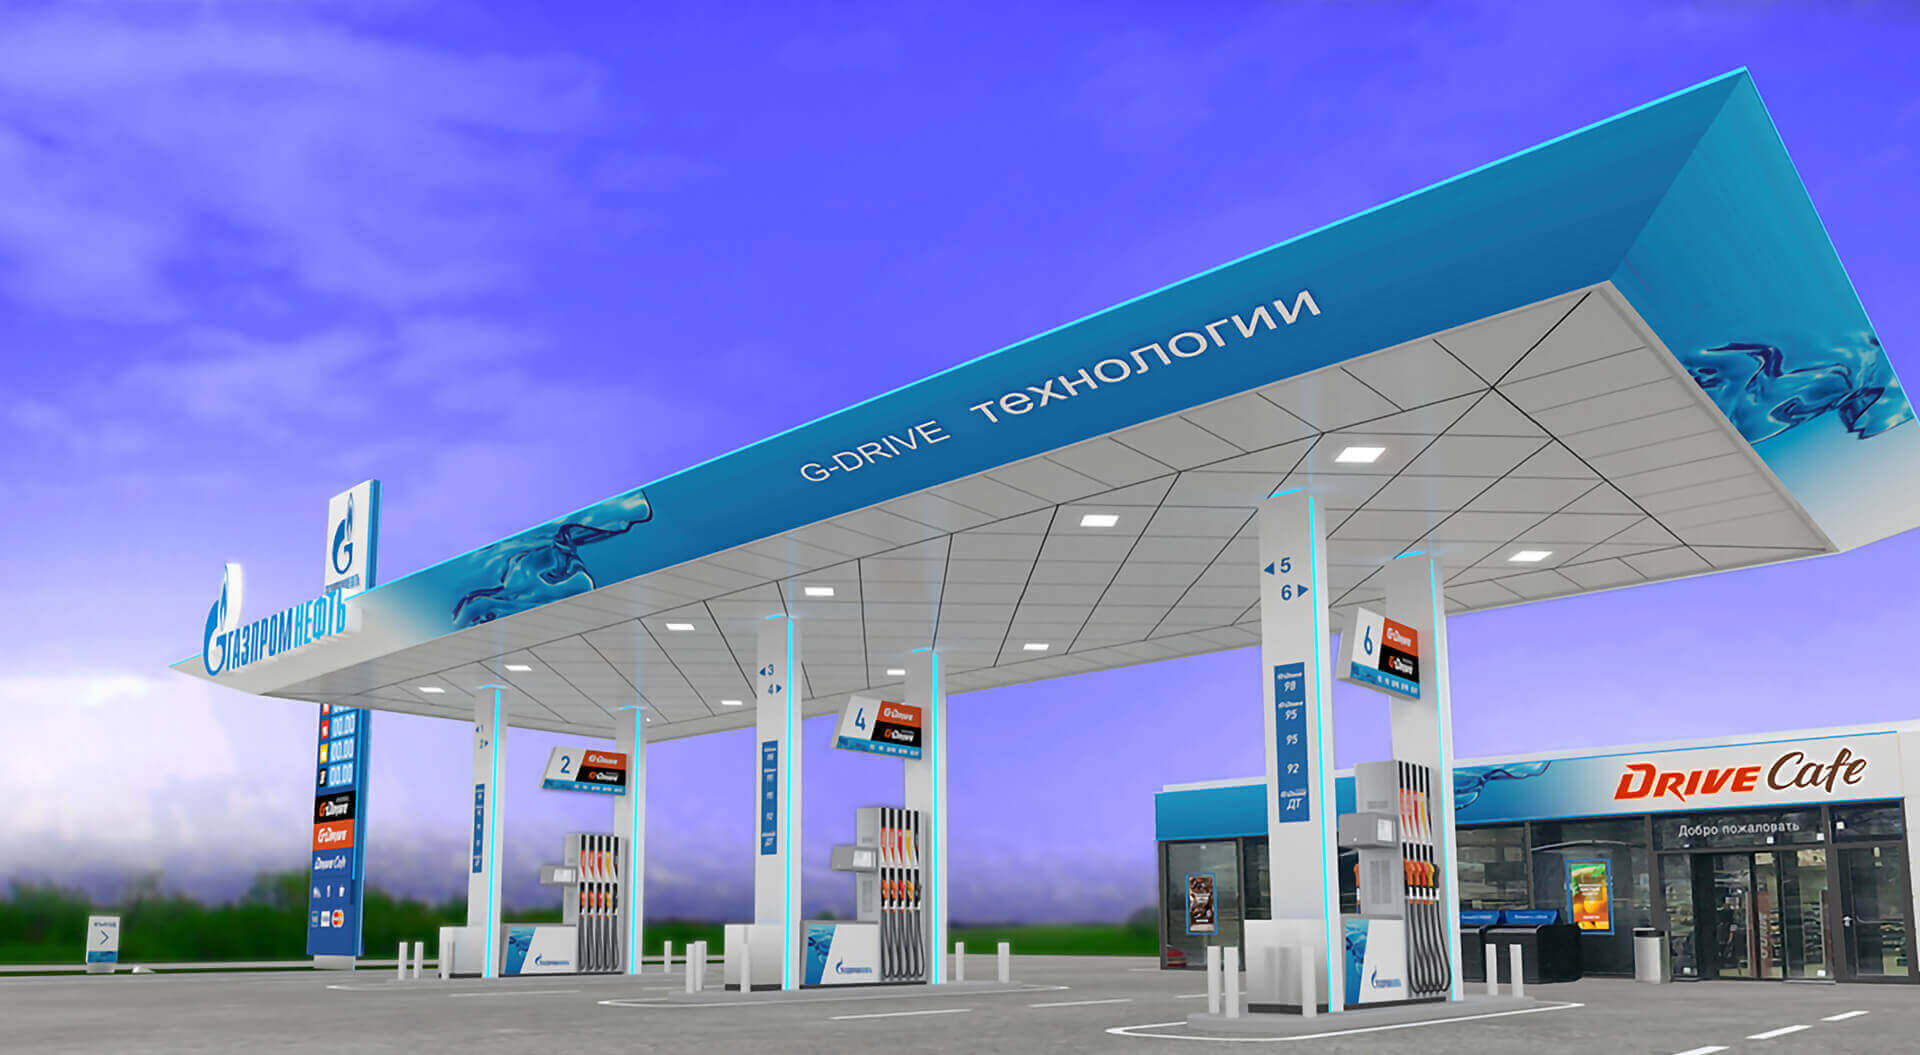 Gazprom Petrol Forecourt Benchmark, Creative Branding, Innovative Canopy Architecture, Design, Graphic Communications, St Petersburg Russia - CampbellRigg Agency